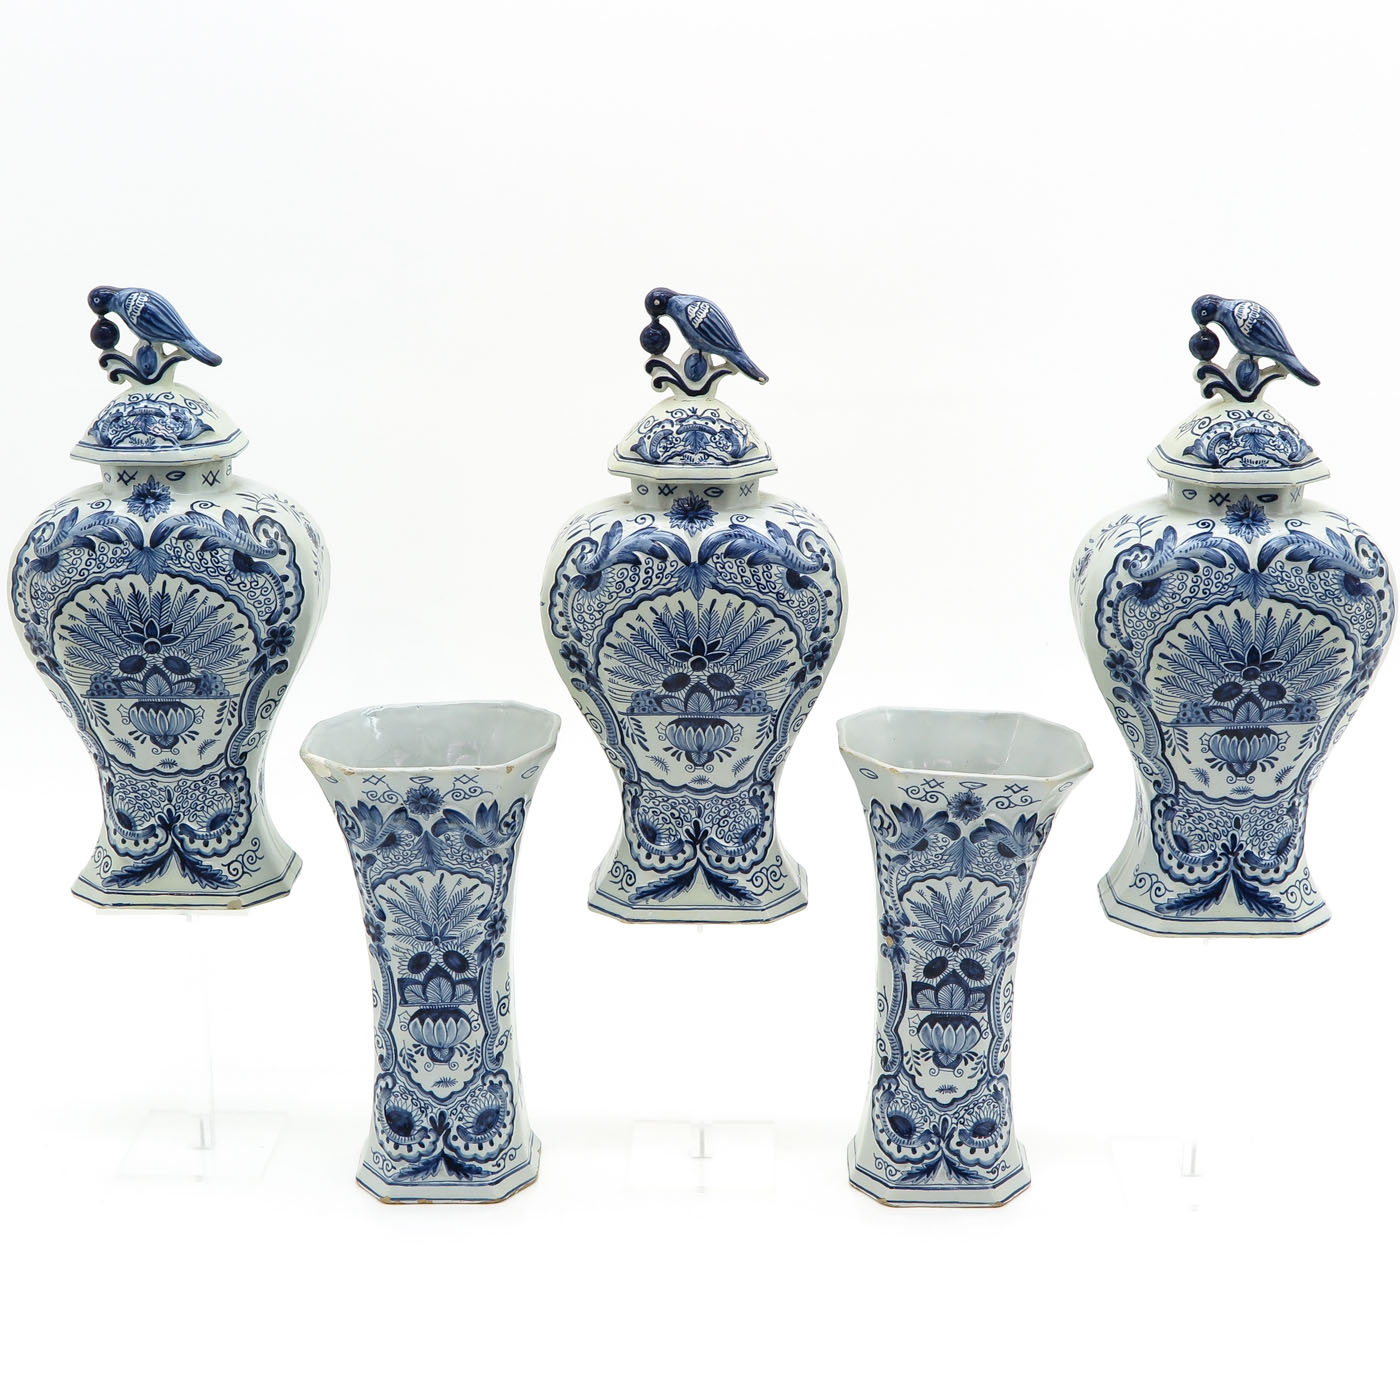 A Five Piece Delft Garniture Set